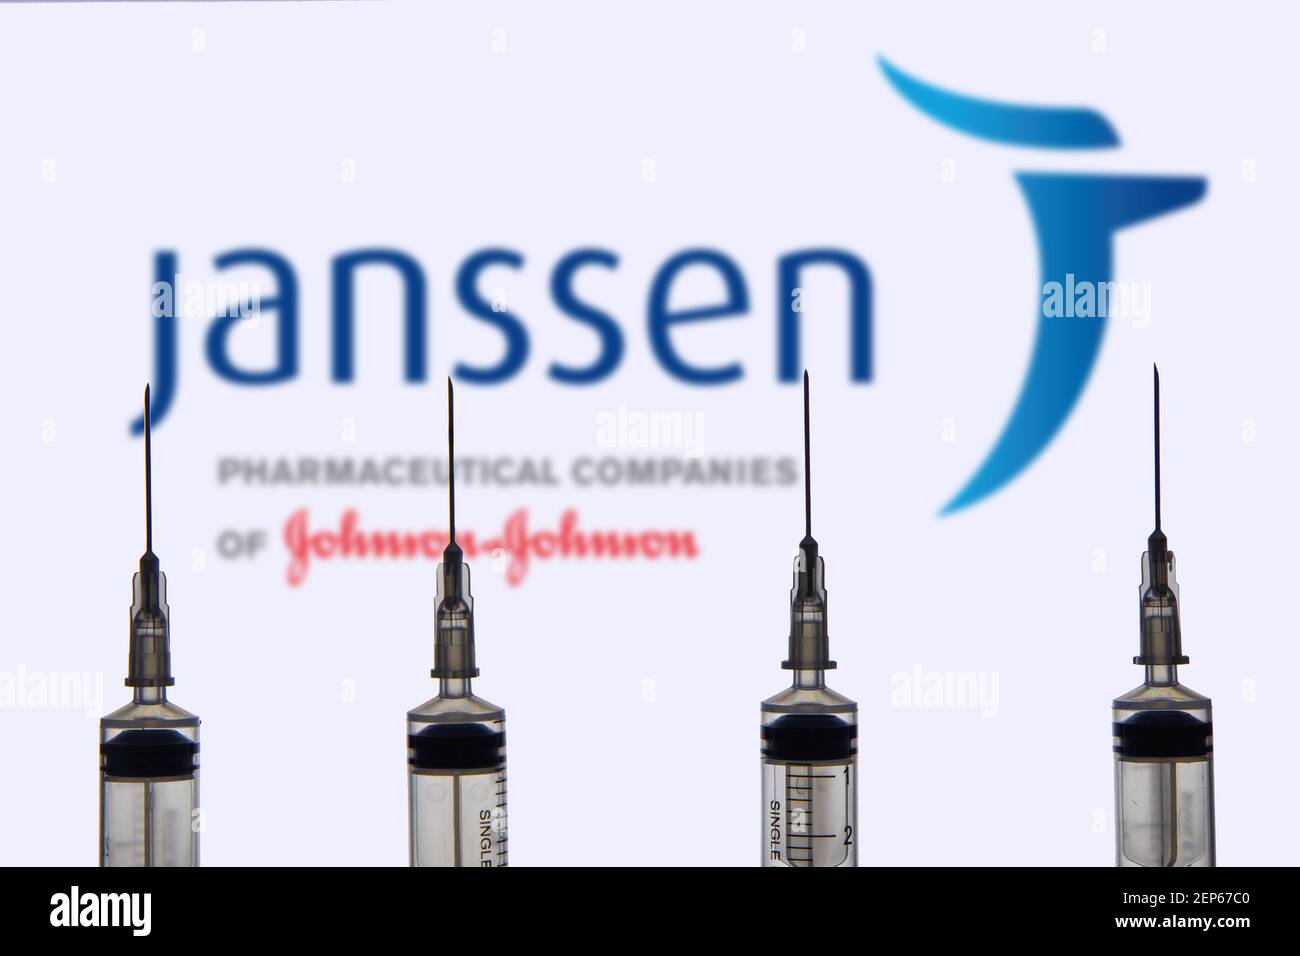 Janssen pharmaceutical companies